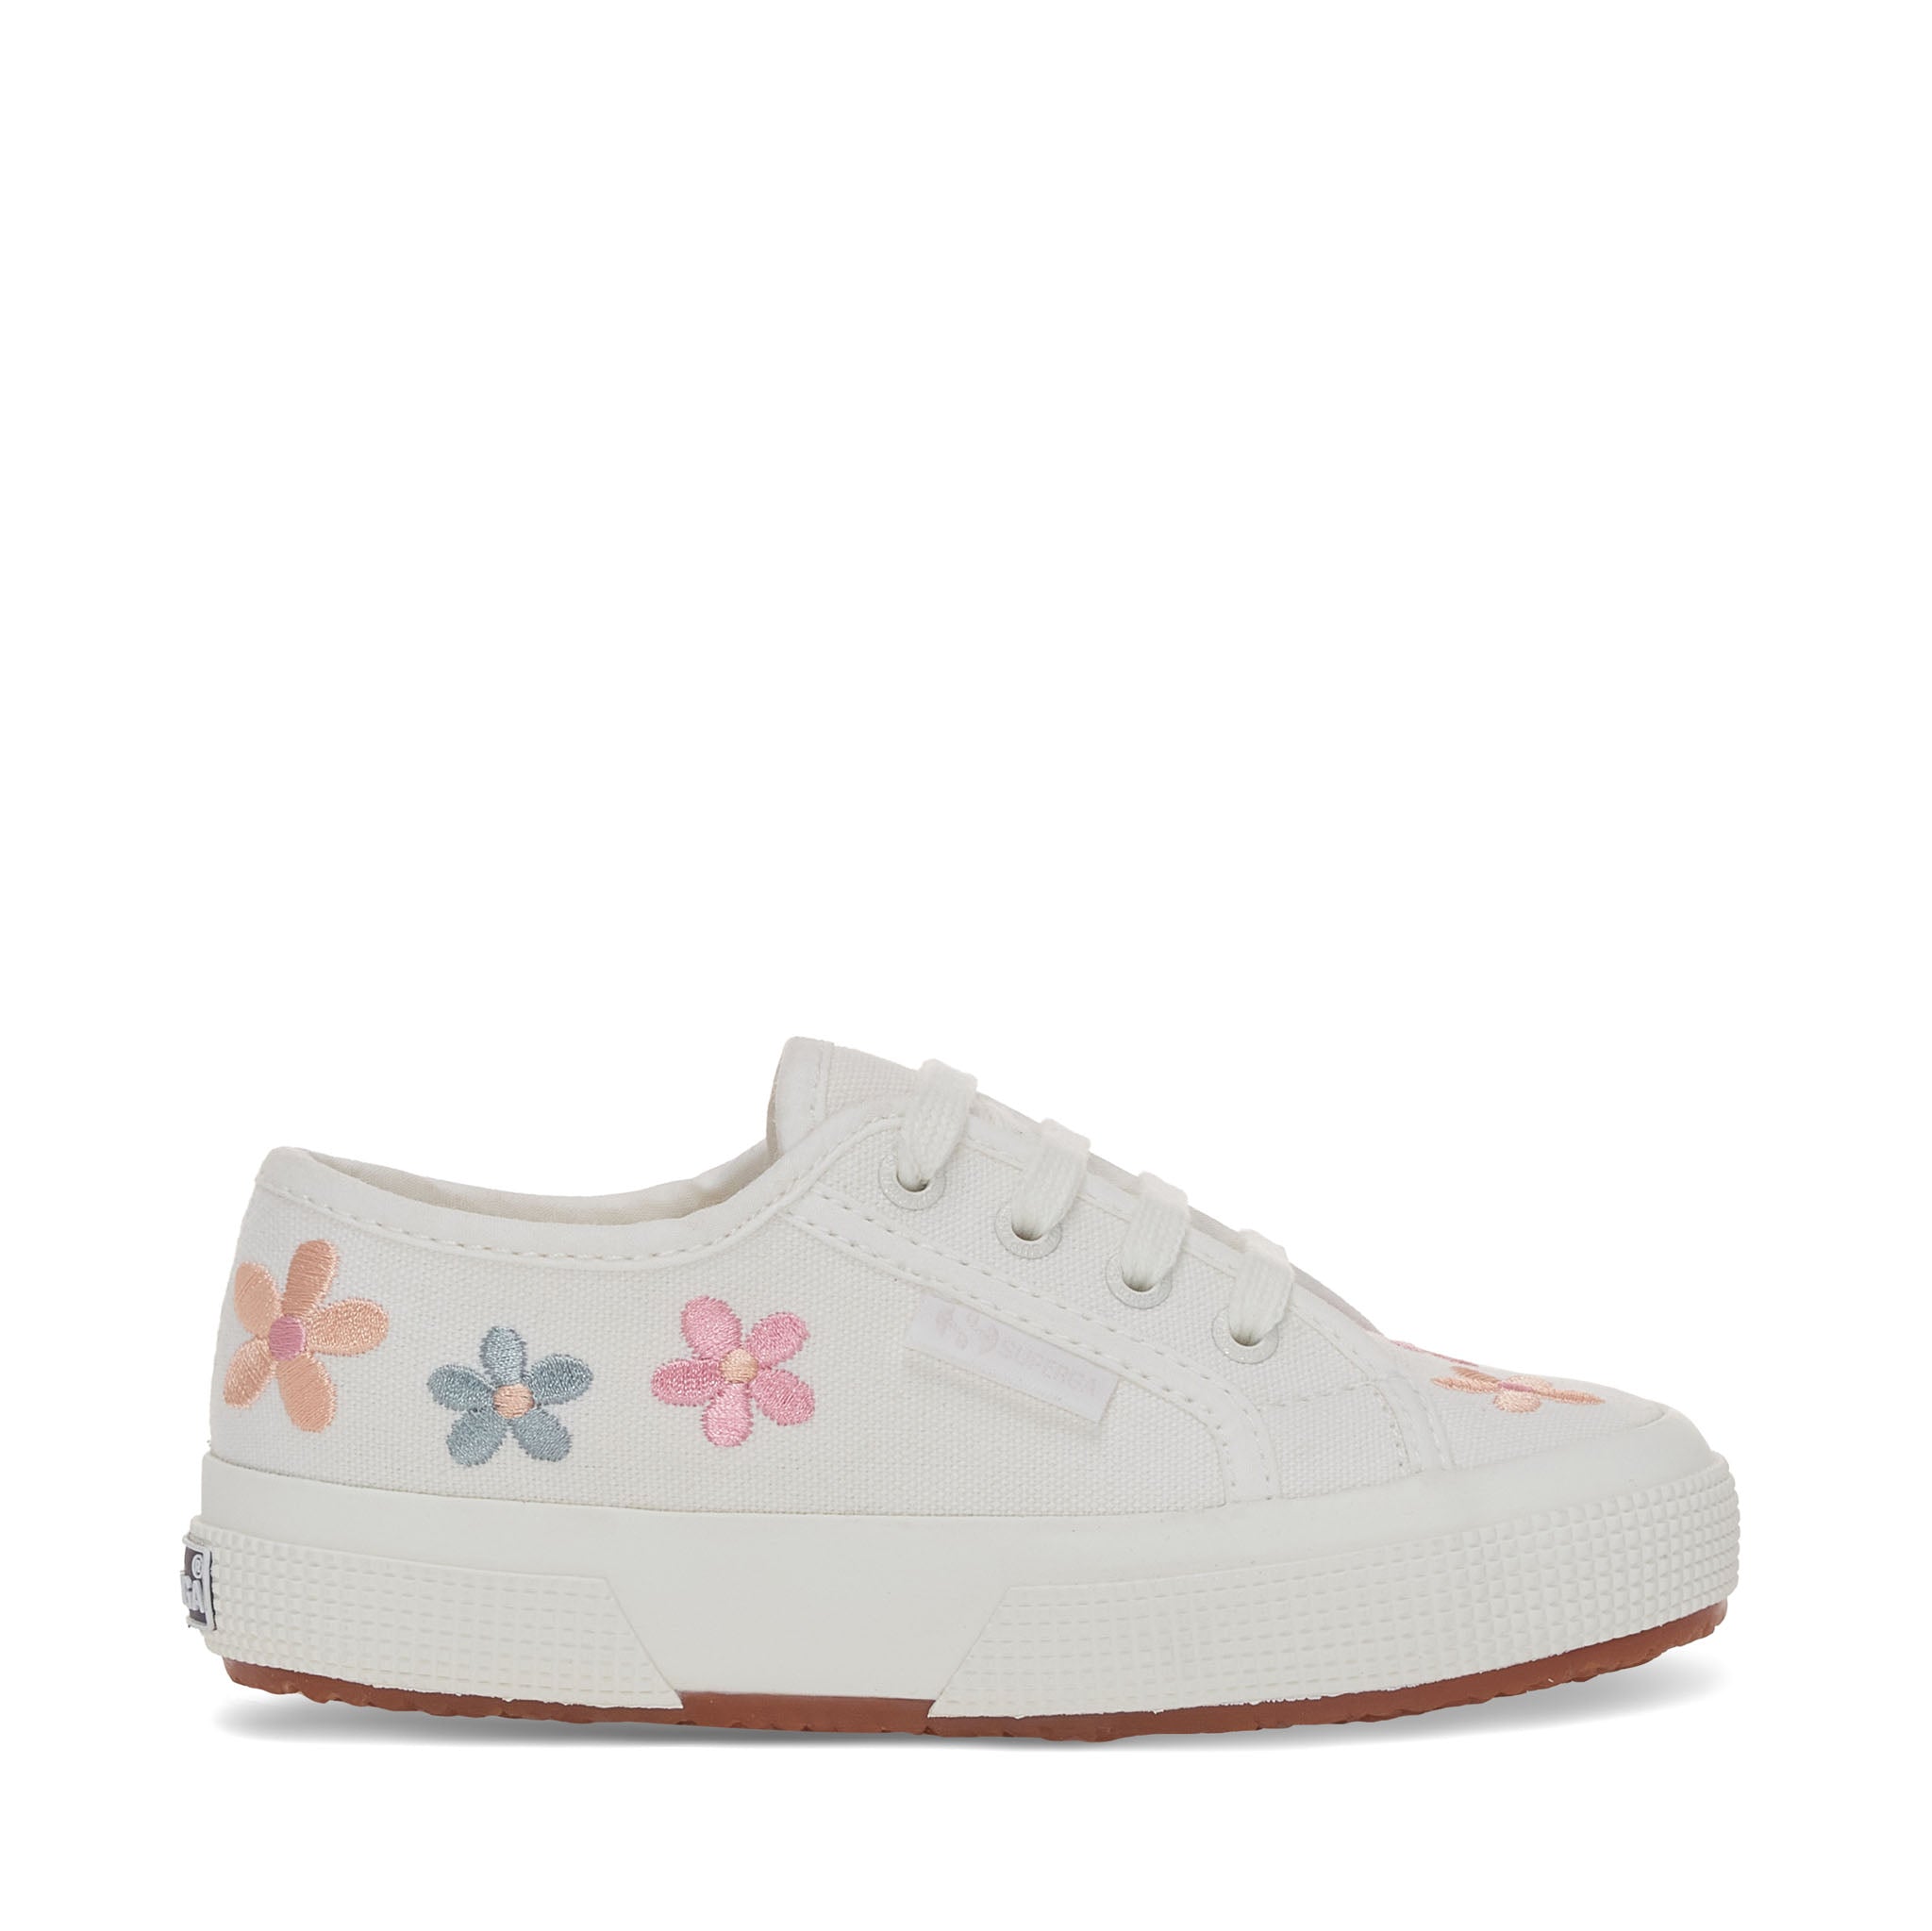 mot Mijnenveld Interpretatie Superga - 2750 Kids Embroidery Flowers Sneakers - White Floral – Superga US